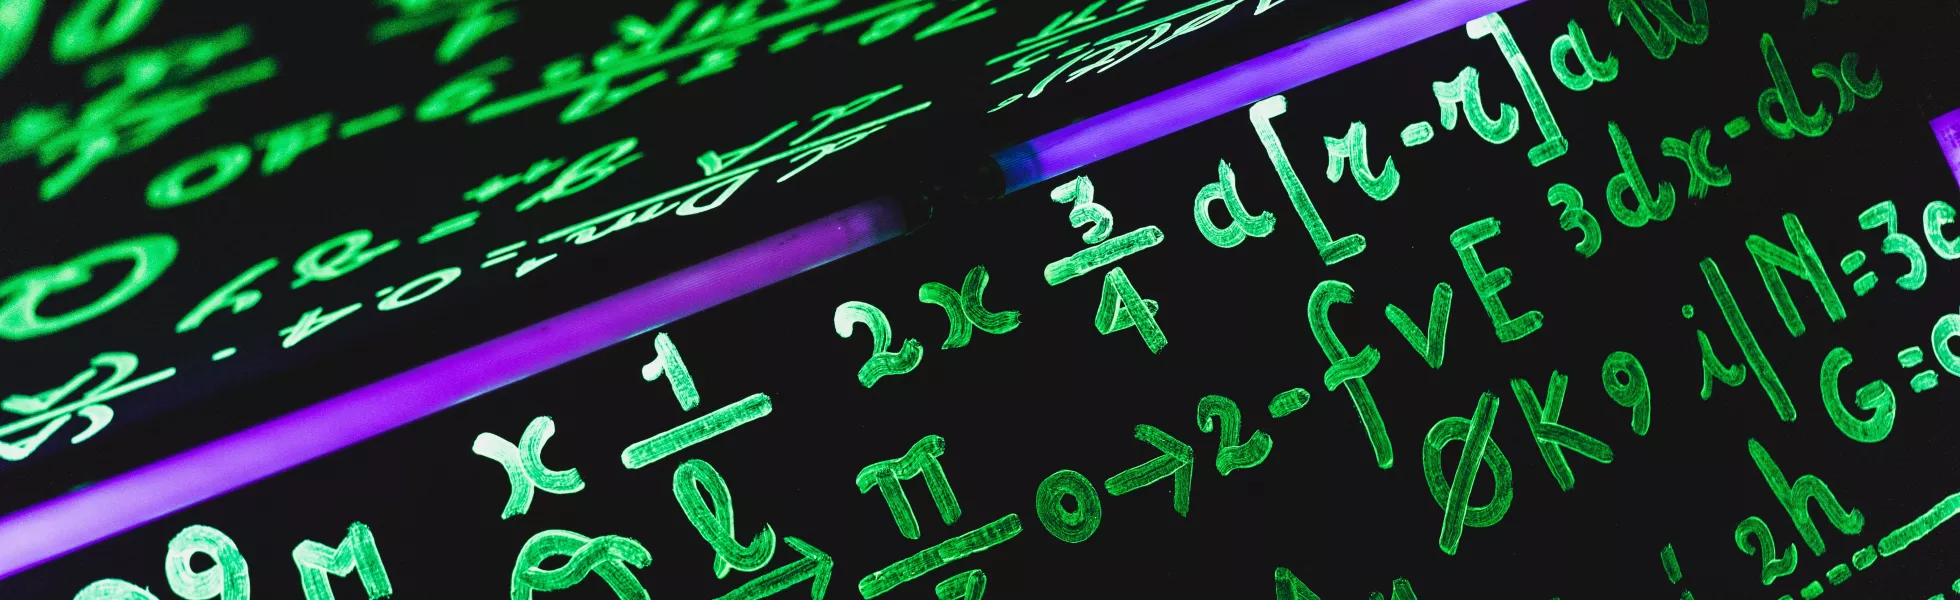 Green math equations illuminated by a uv light